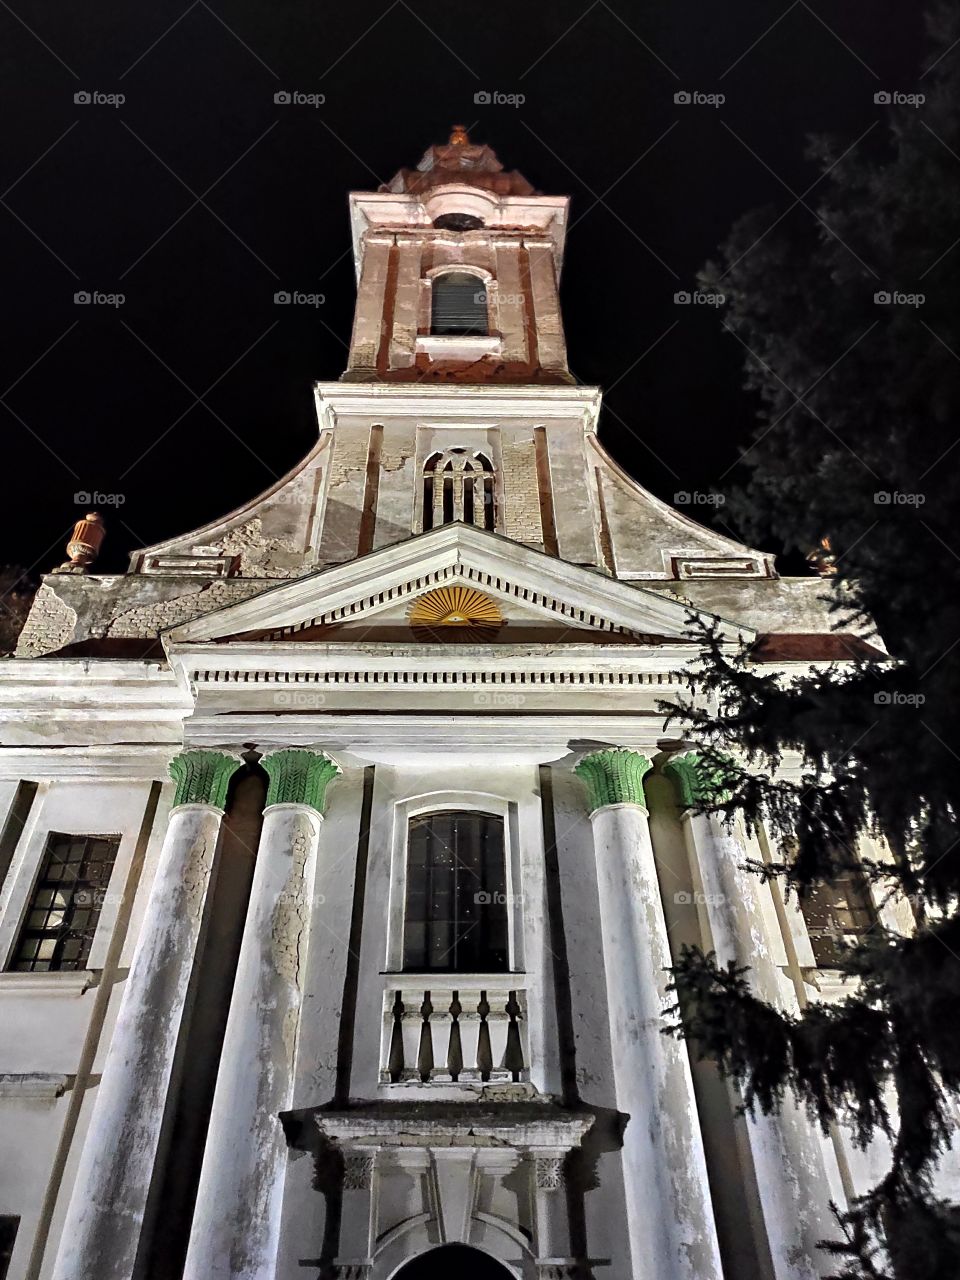 Vrbas Serbia Protestant Church front white facade